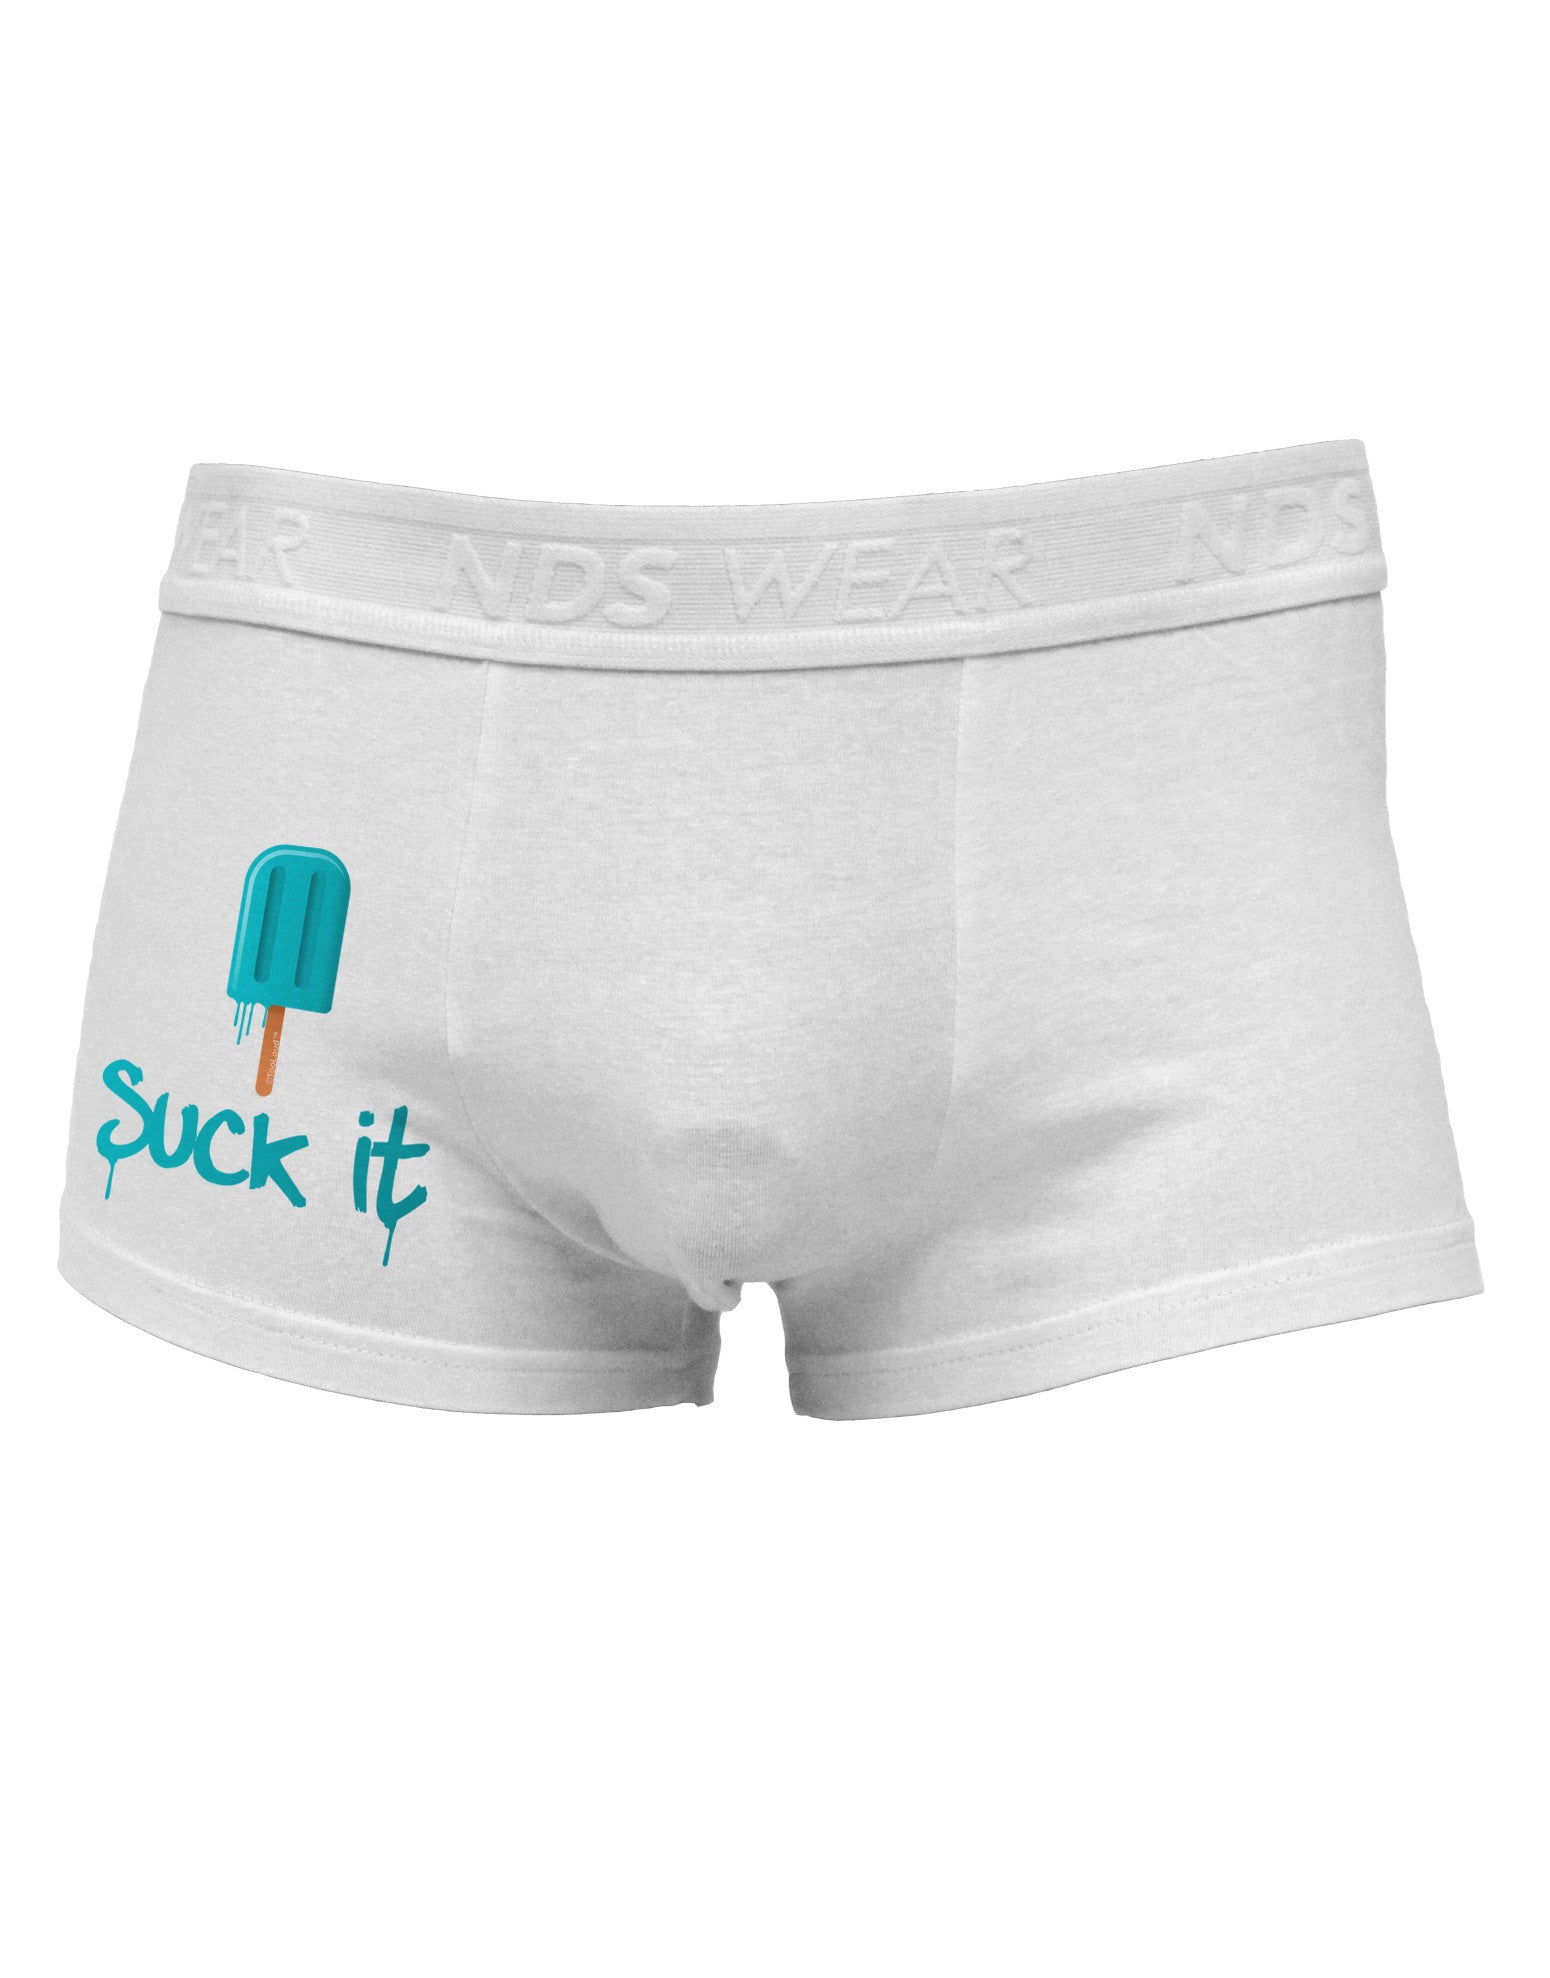 Suck It Popsicle Mens Boxer Brief Underwear - NDS WEAR